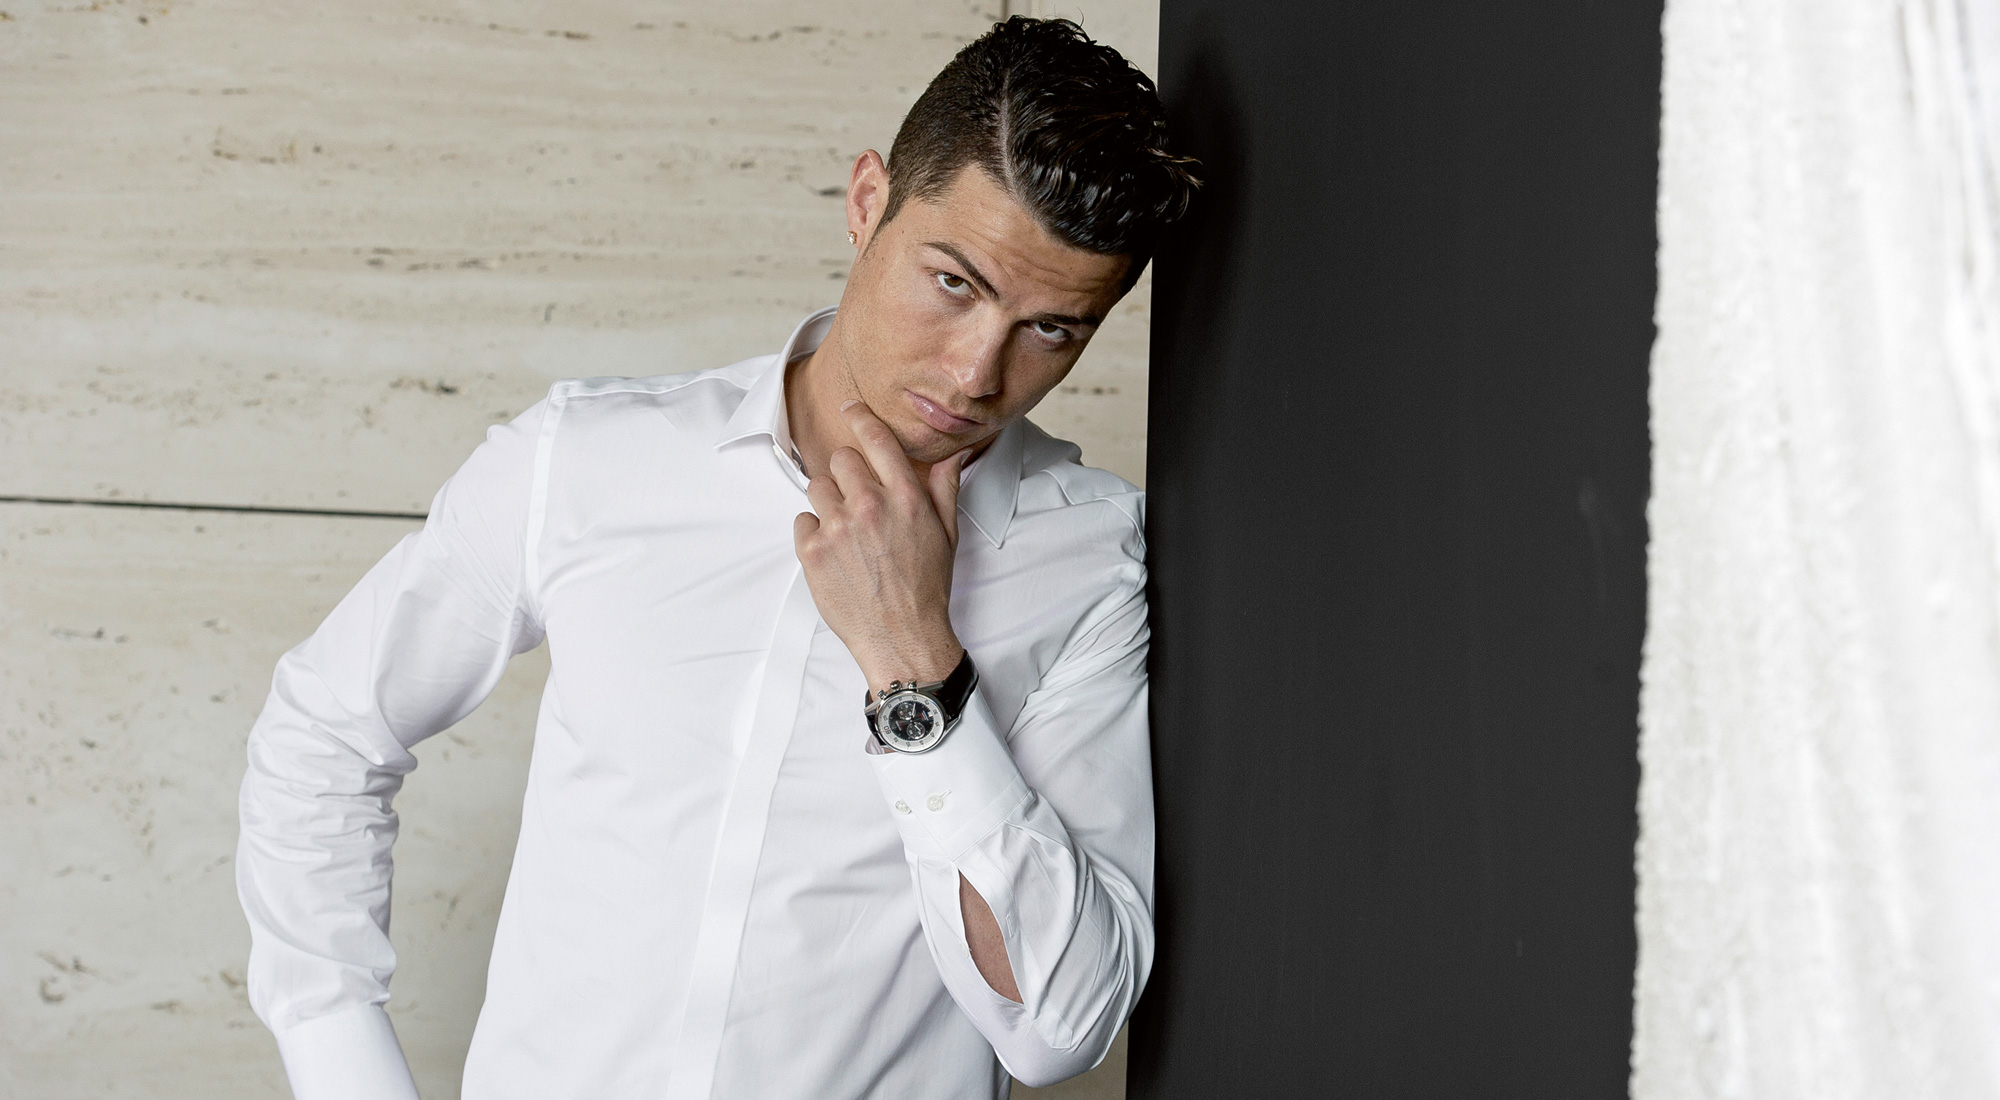 Shirt Louis Vuitton worn by Cristiano Ronaldo on the account